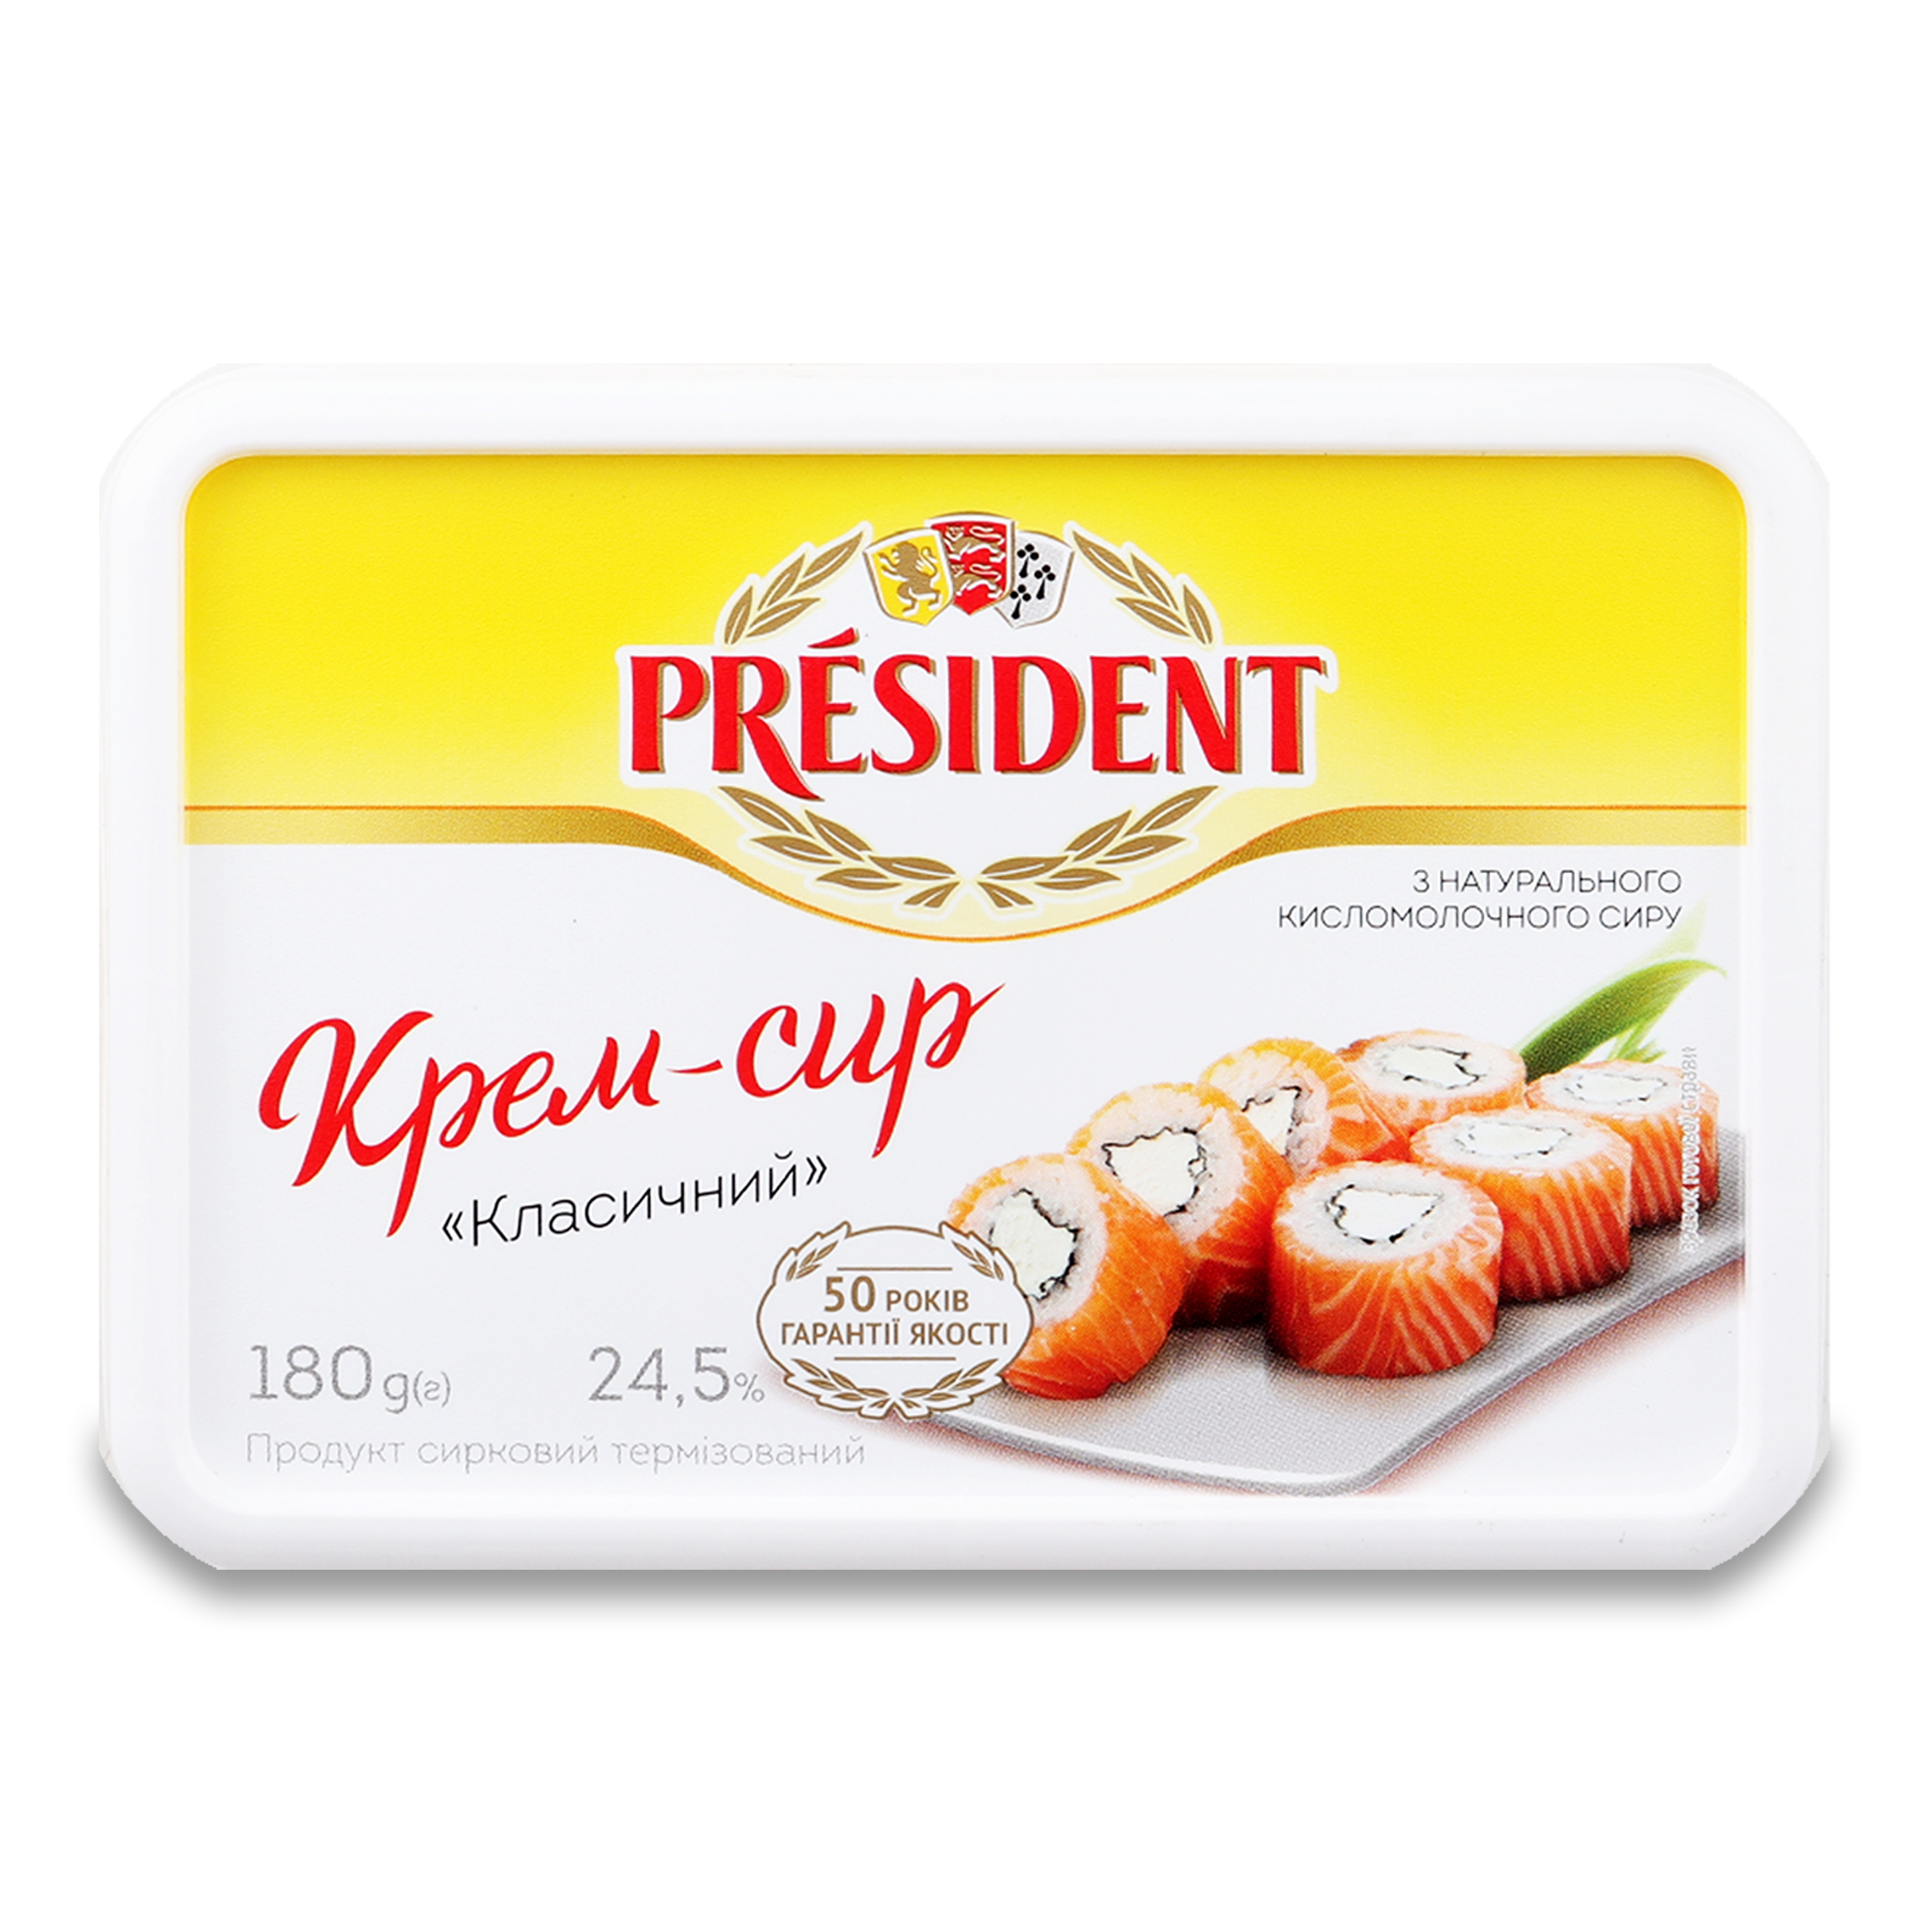 President Classic Cream-Cheese 24,5% 180g